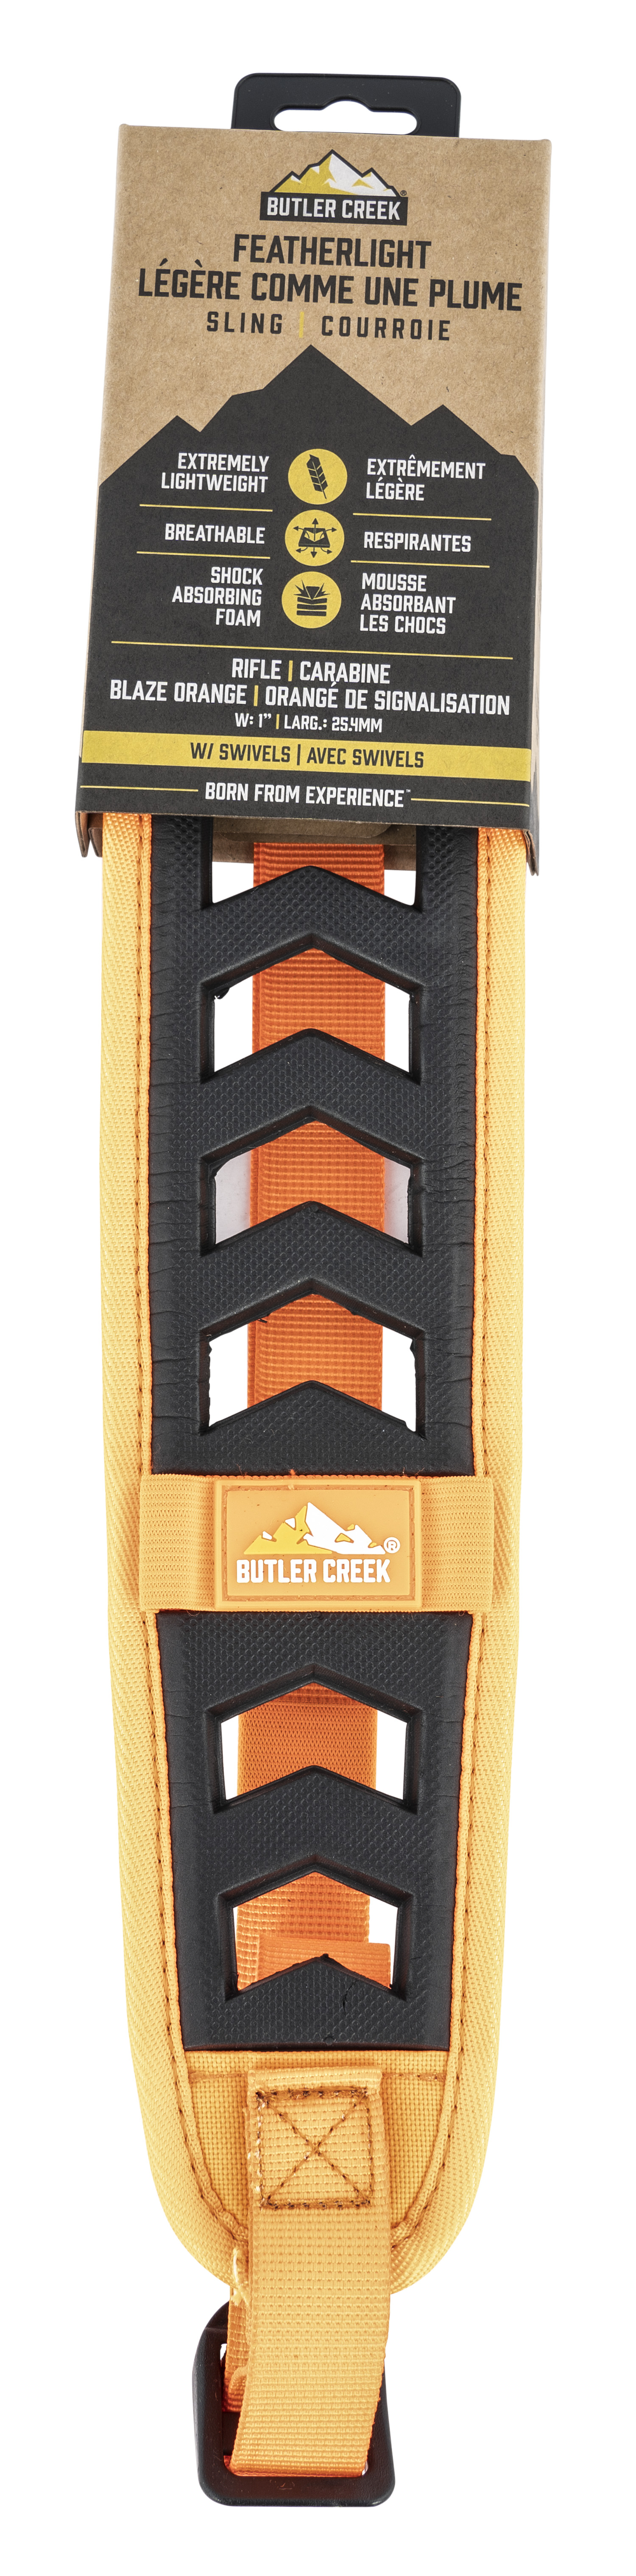 Butler Creek 190036 Featherlight Sling made of Blaze Orange Foam with 22